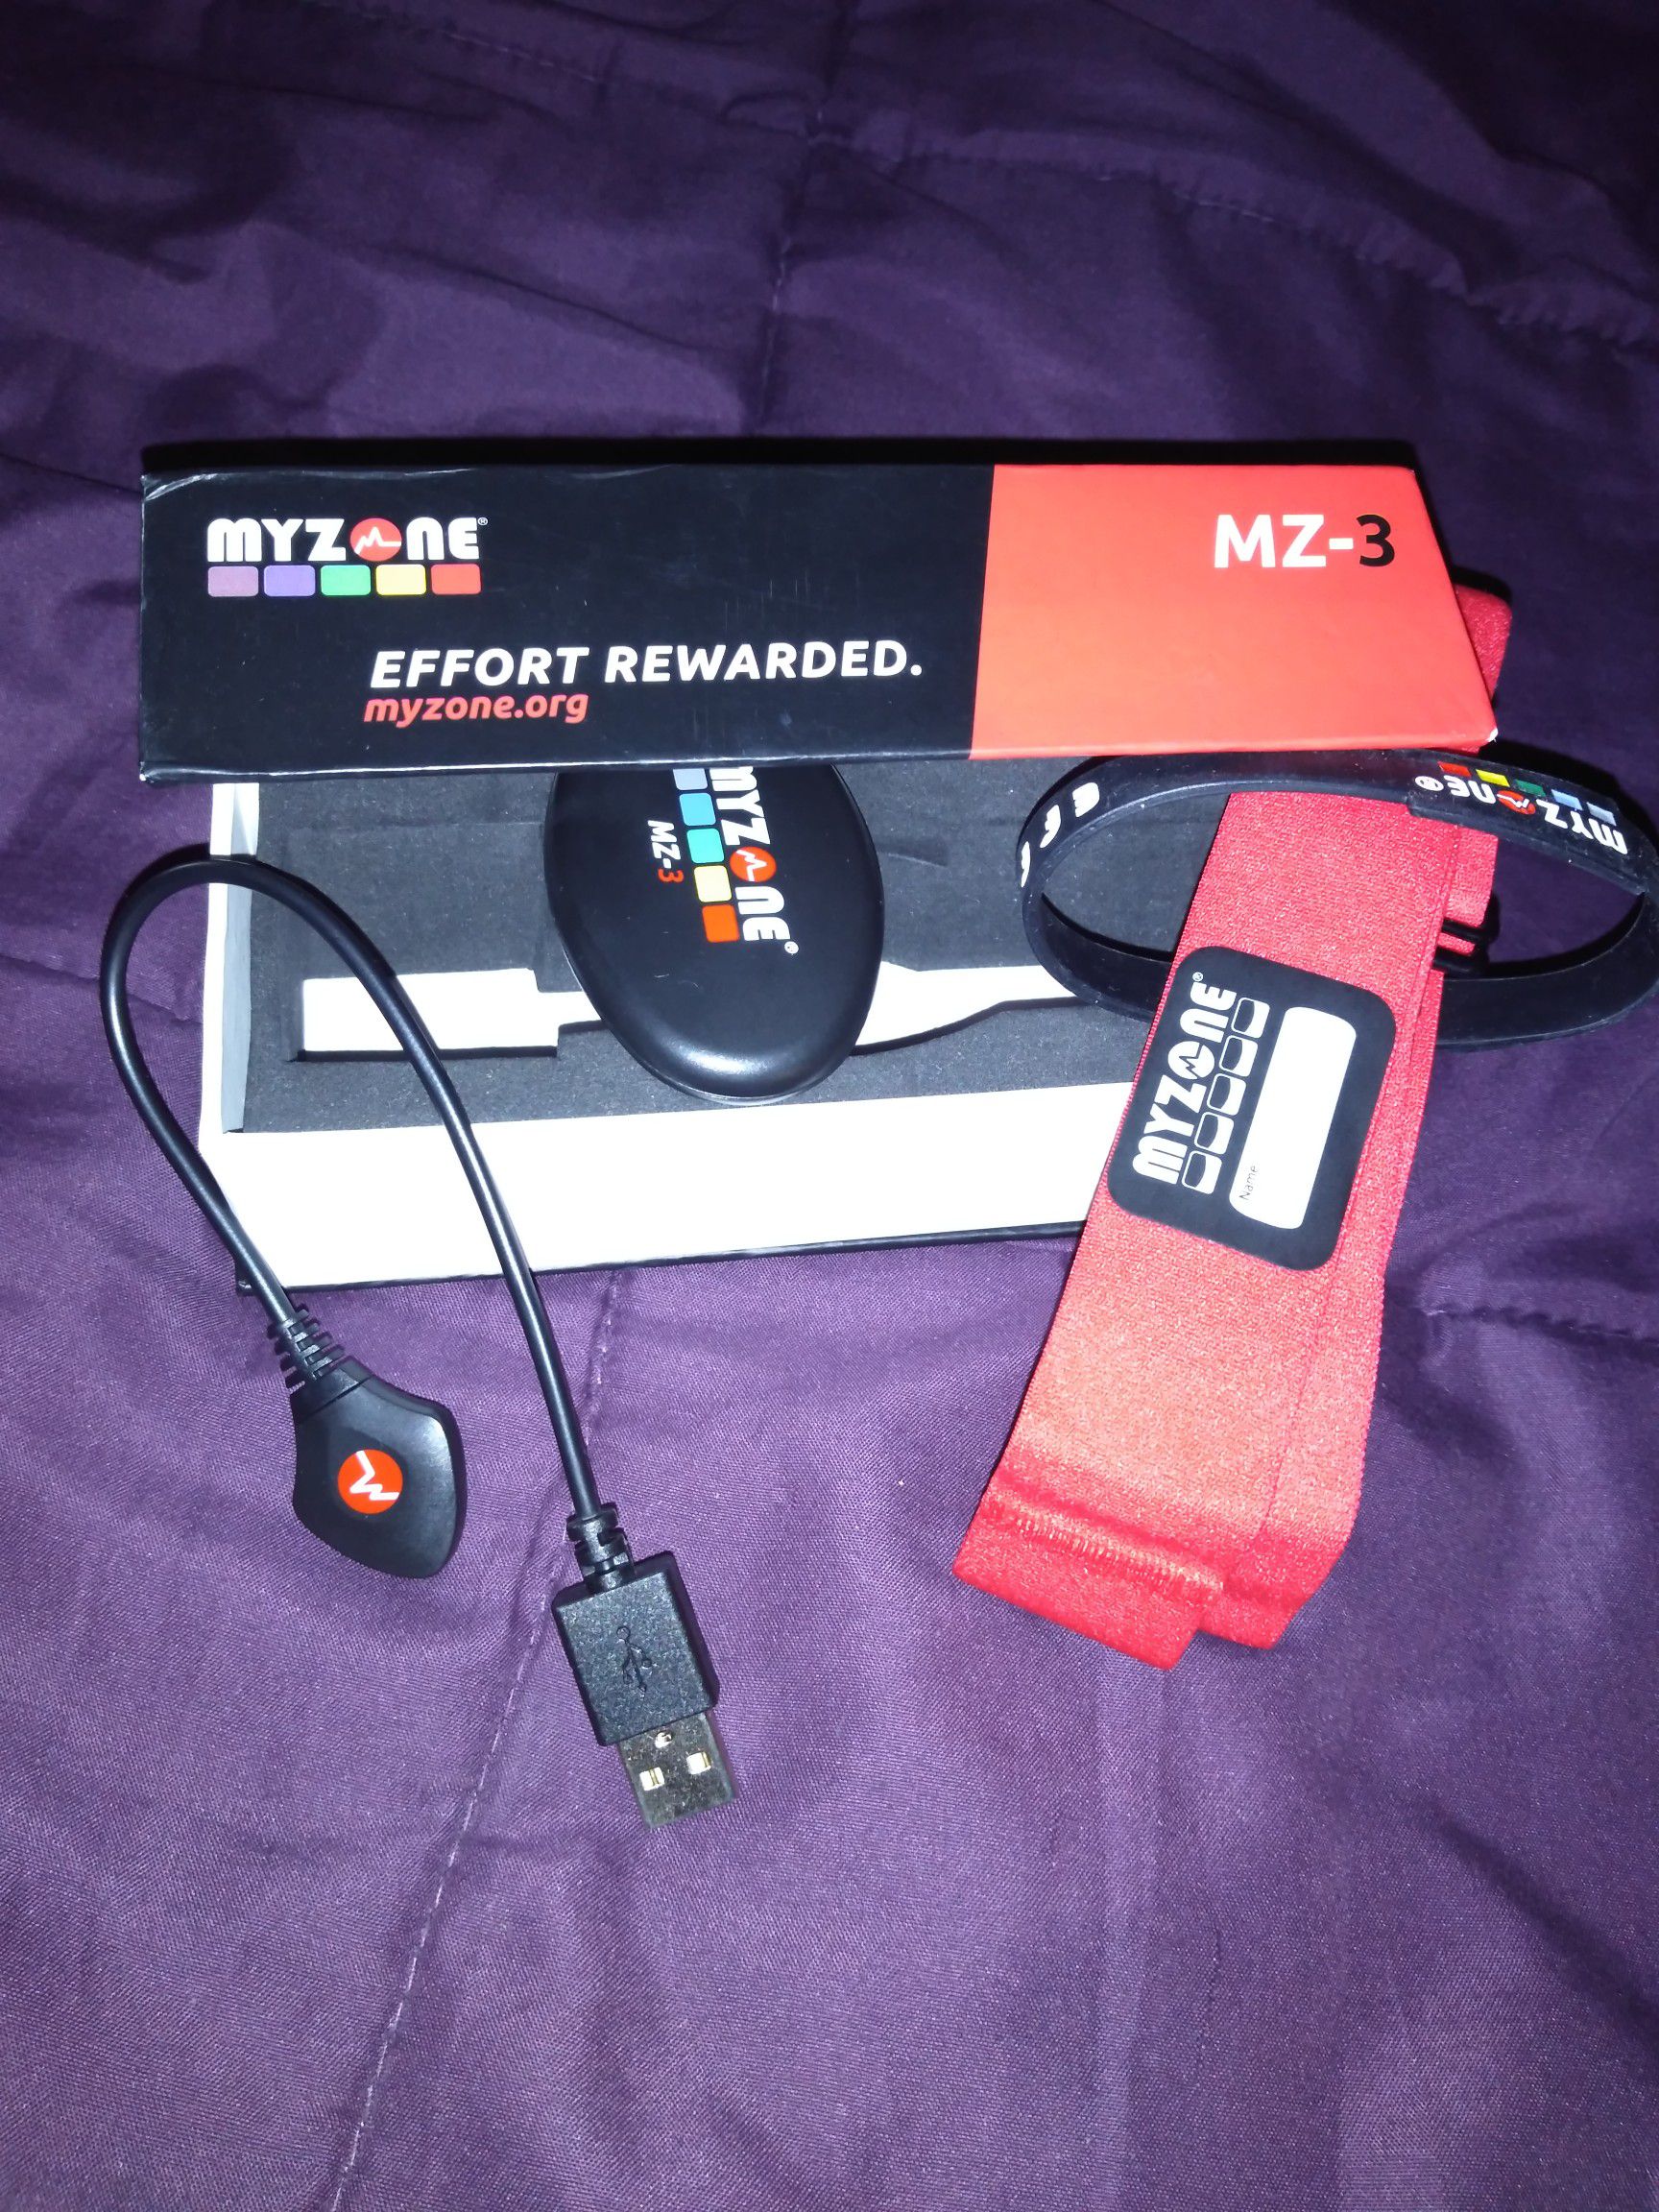 My Zone MZ-3 physical activity belt